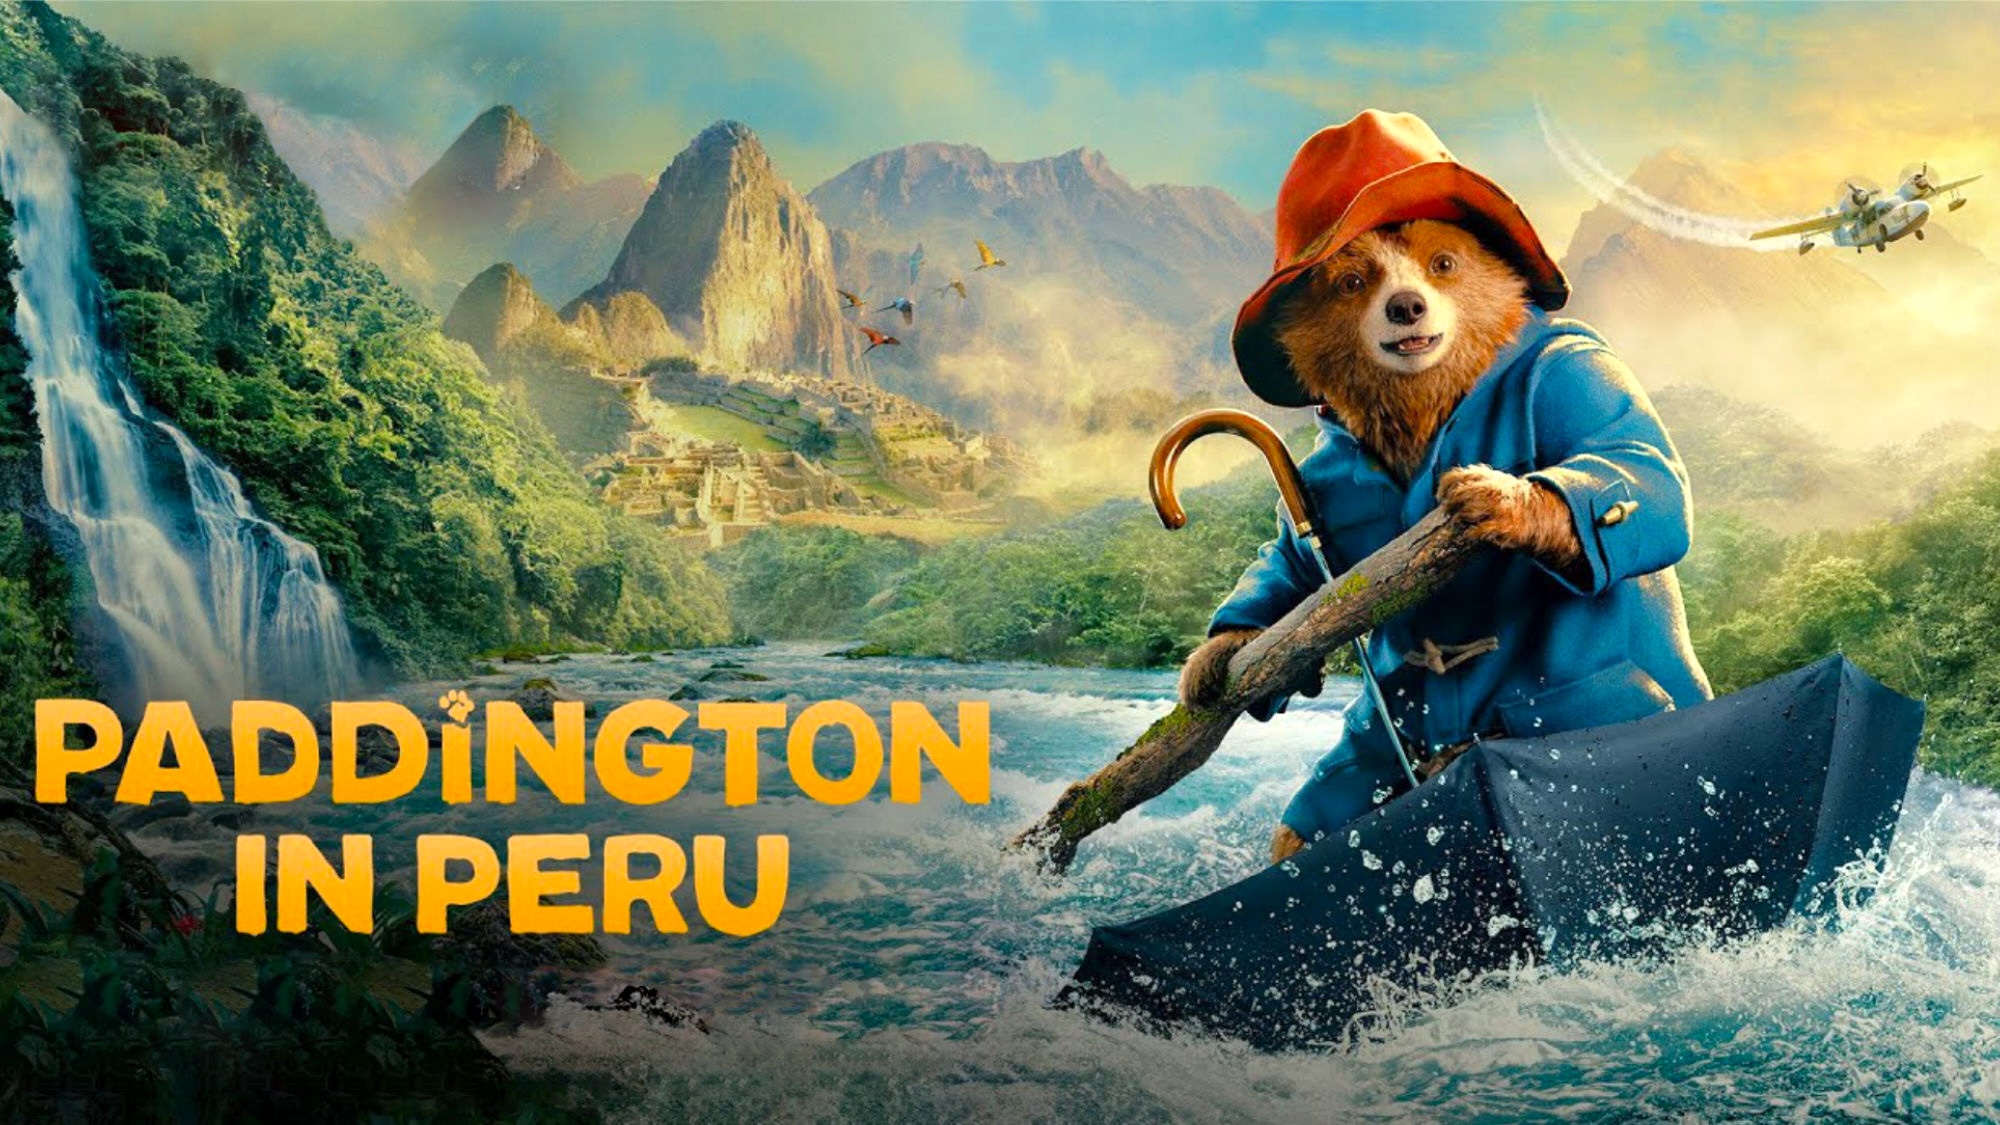 Paddington-en-Peru-trailer